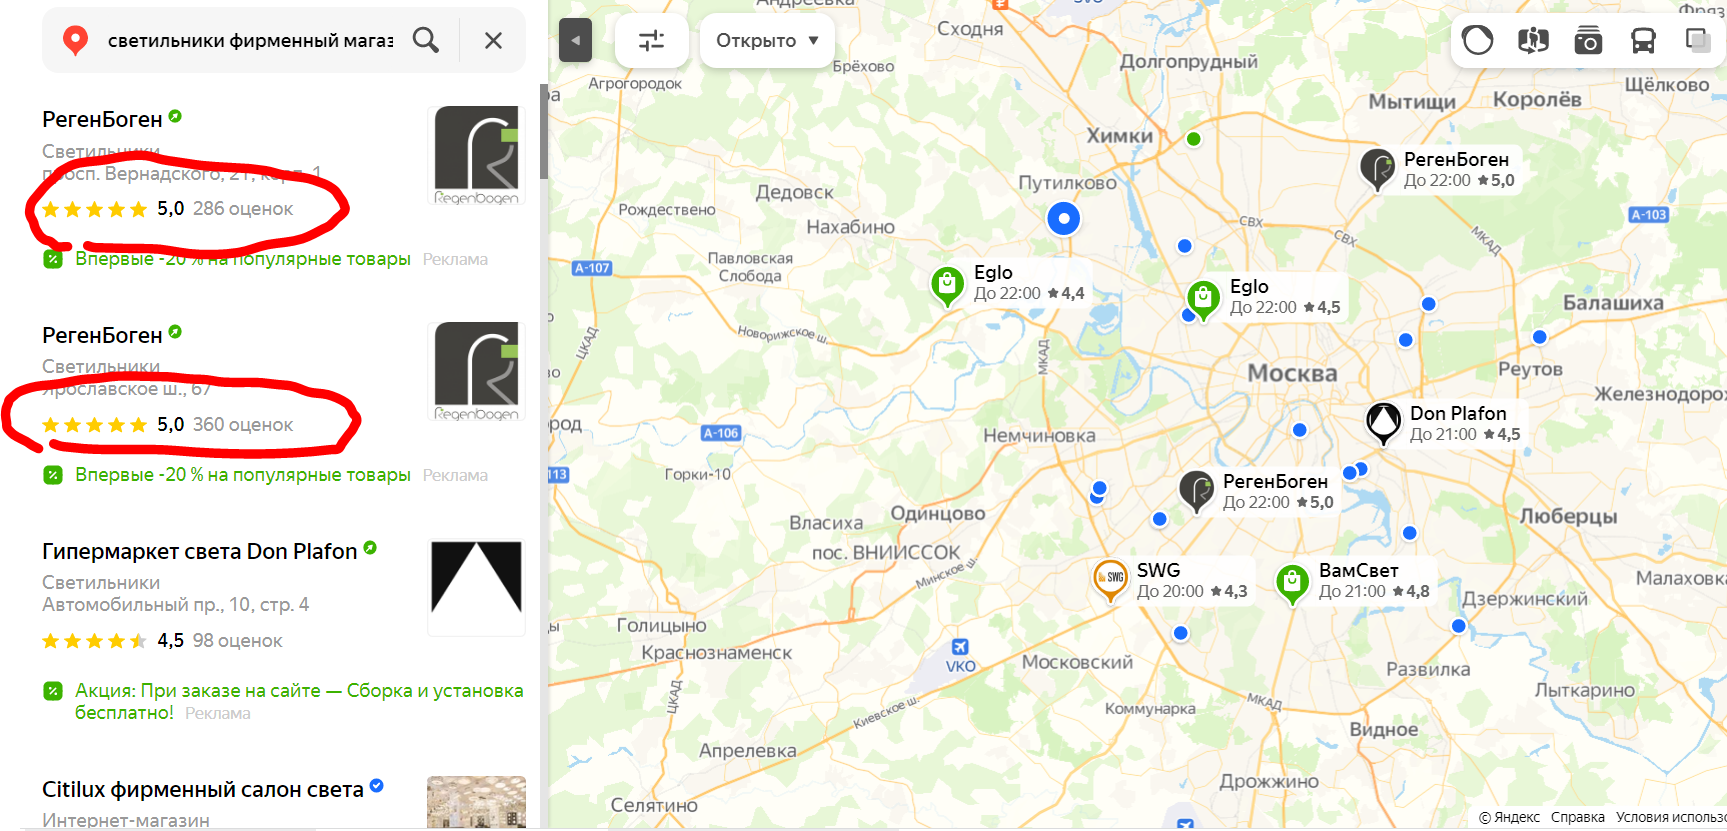 2-е направление: отзывы на Google.Maps и Яндекс.Картах